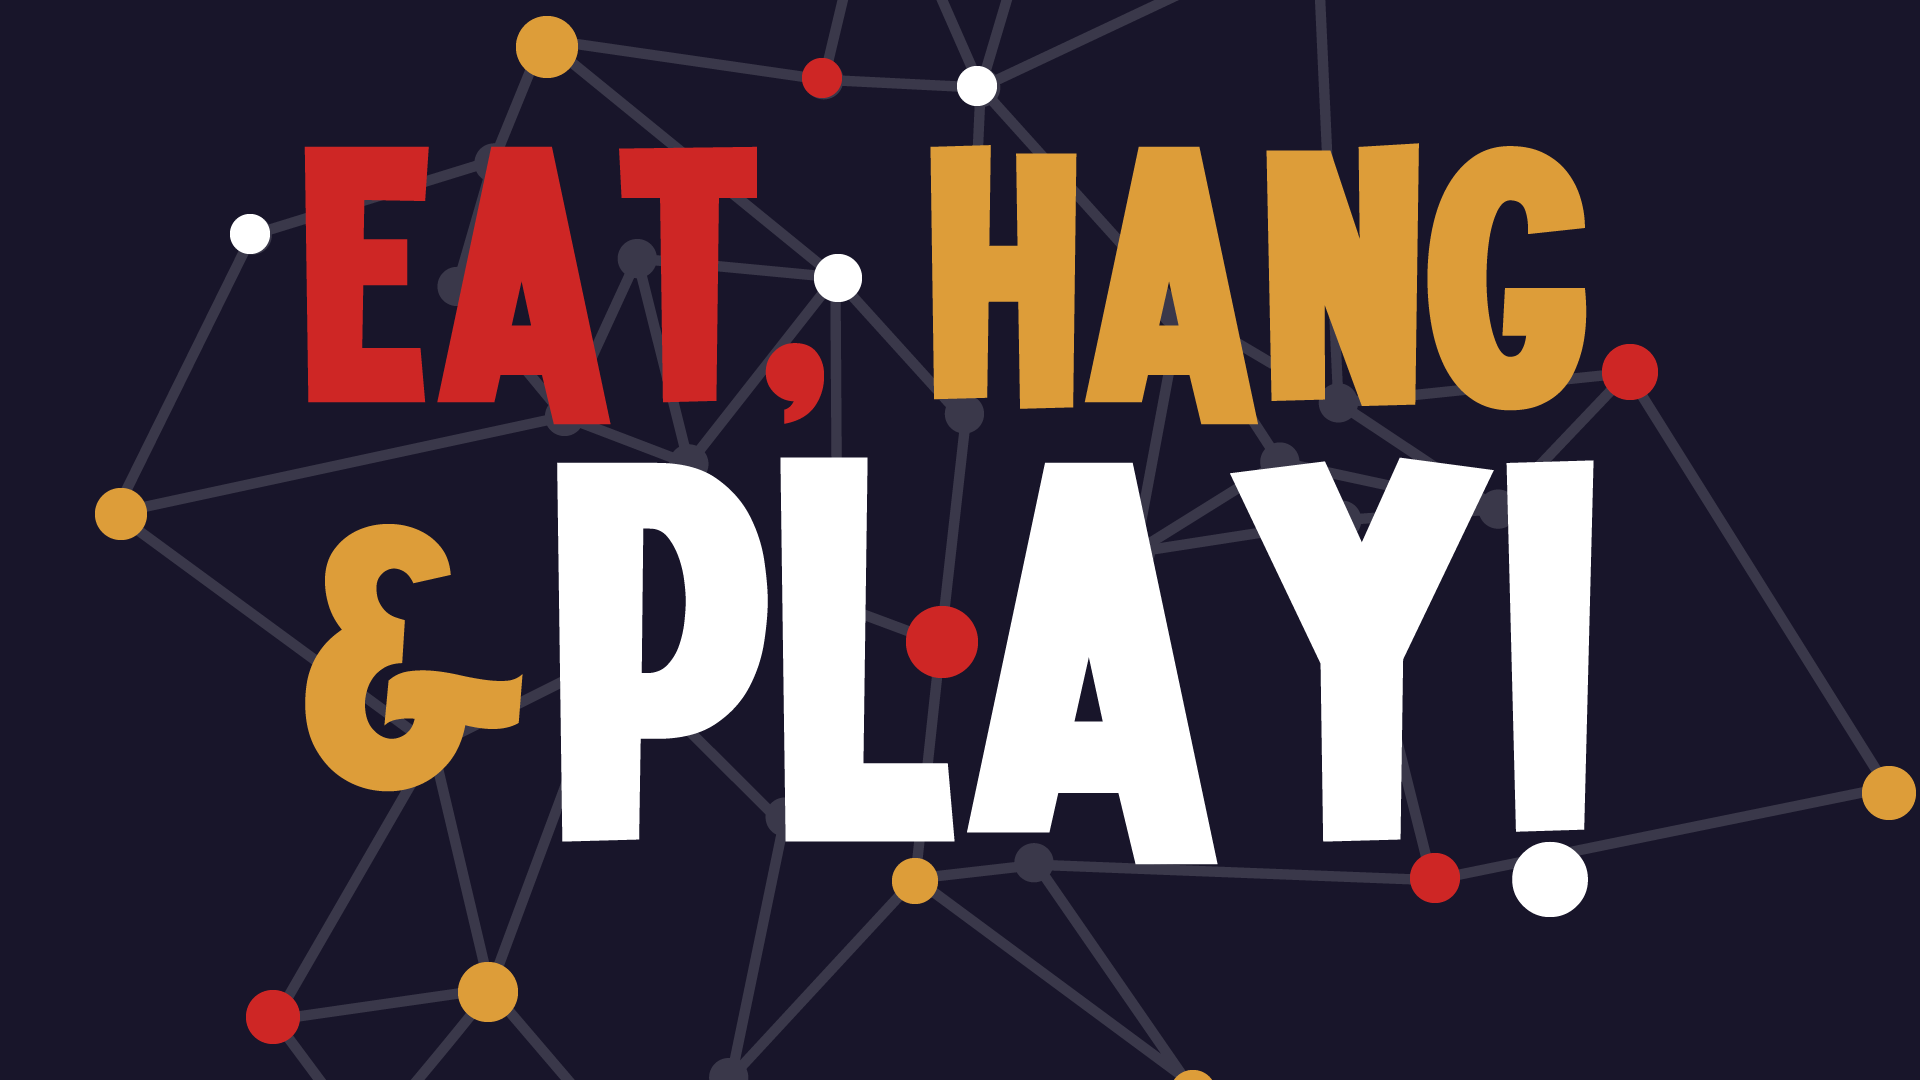 Eat, Hang, & Play!